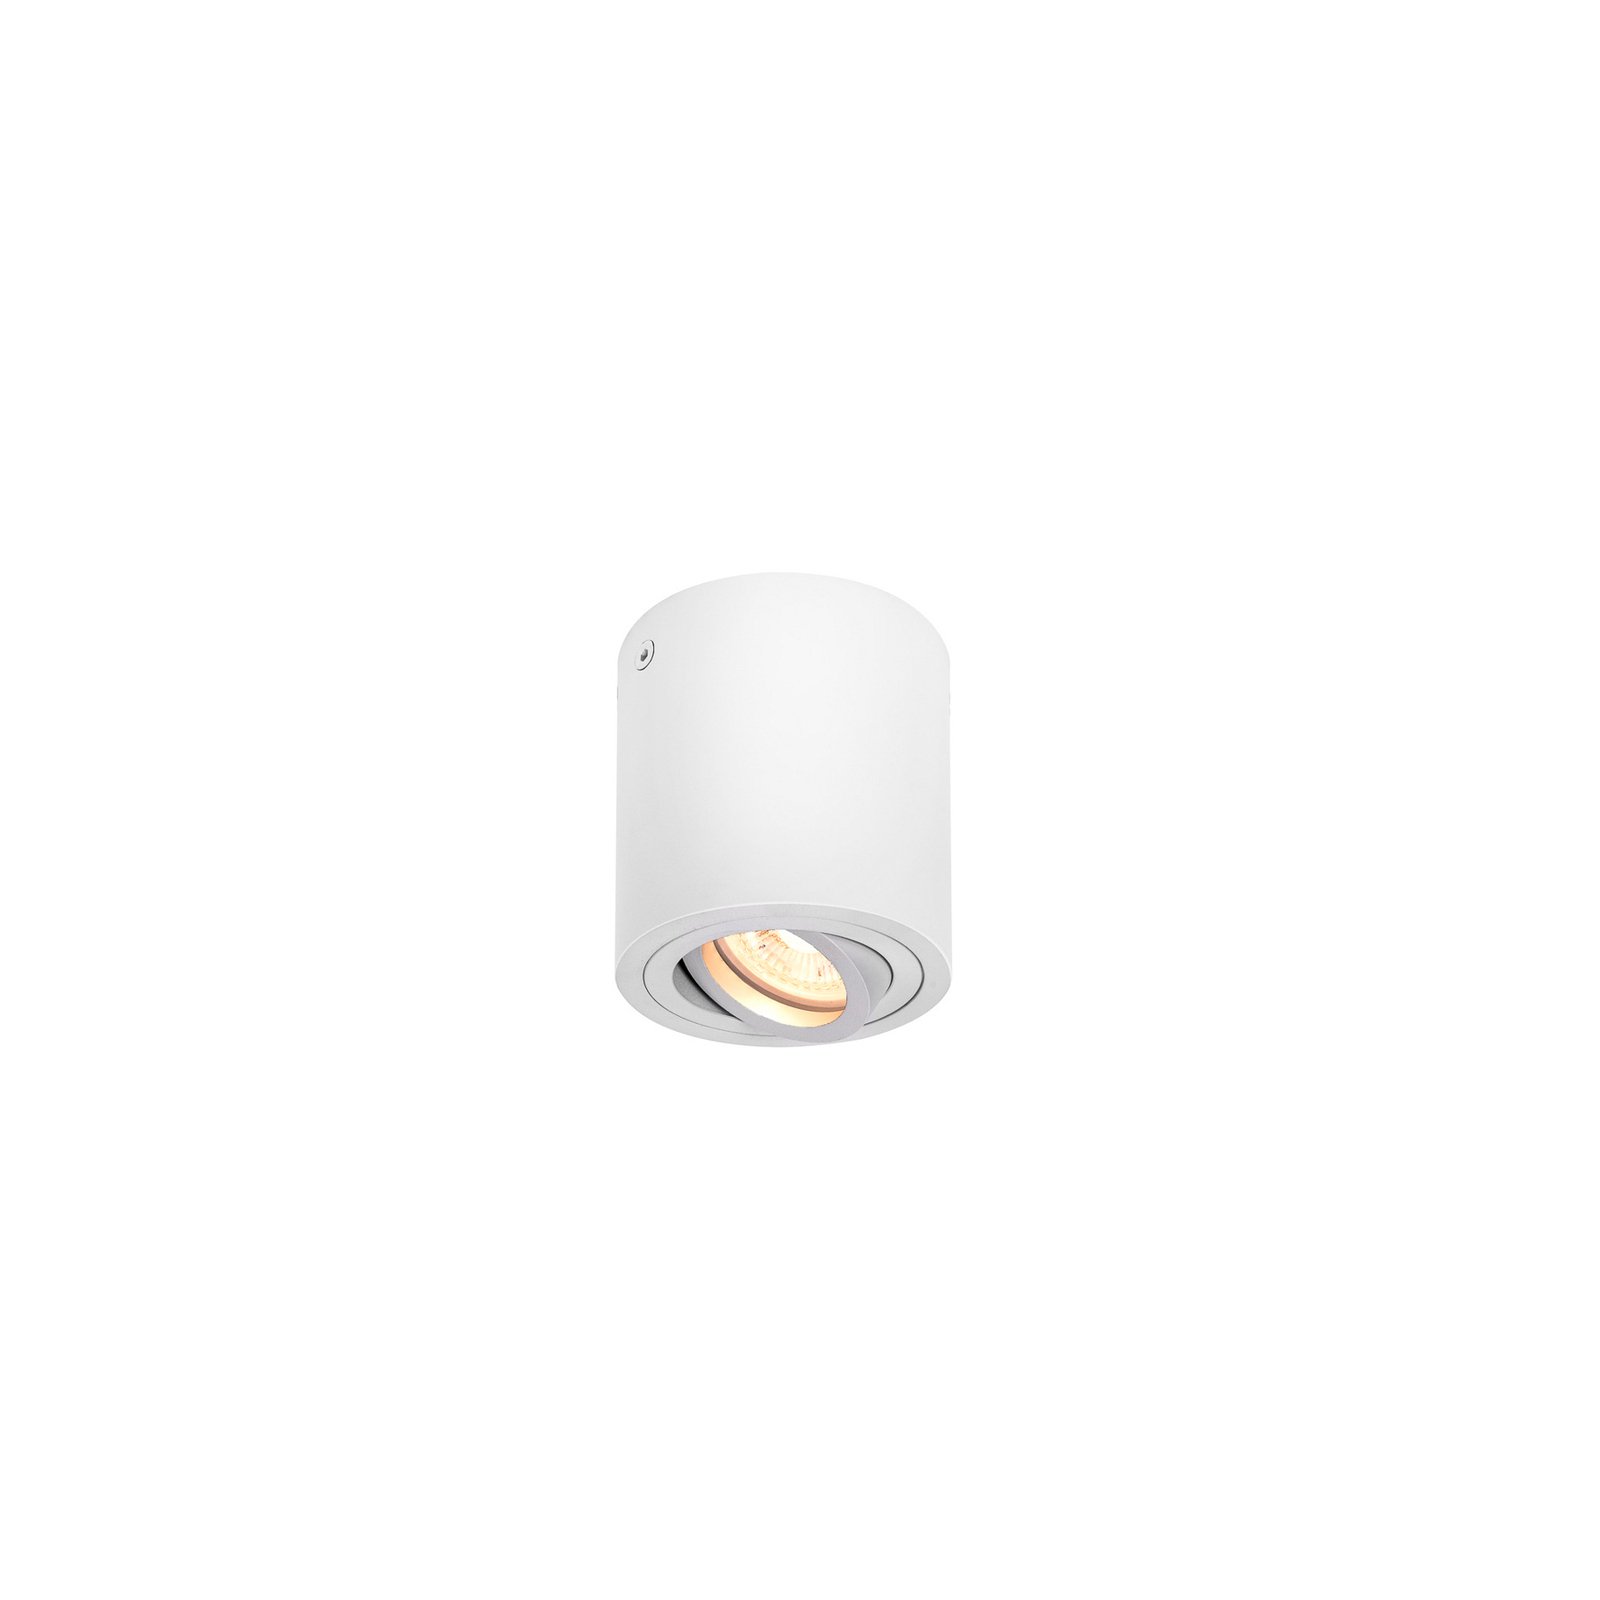 Lampa sufitowa SLV Triledo, biała, aluminium, Ø 10 cm